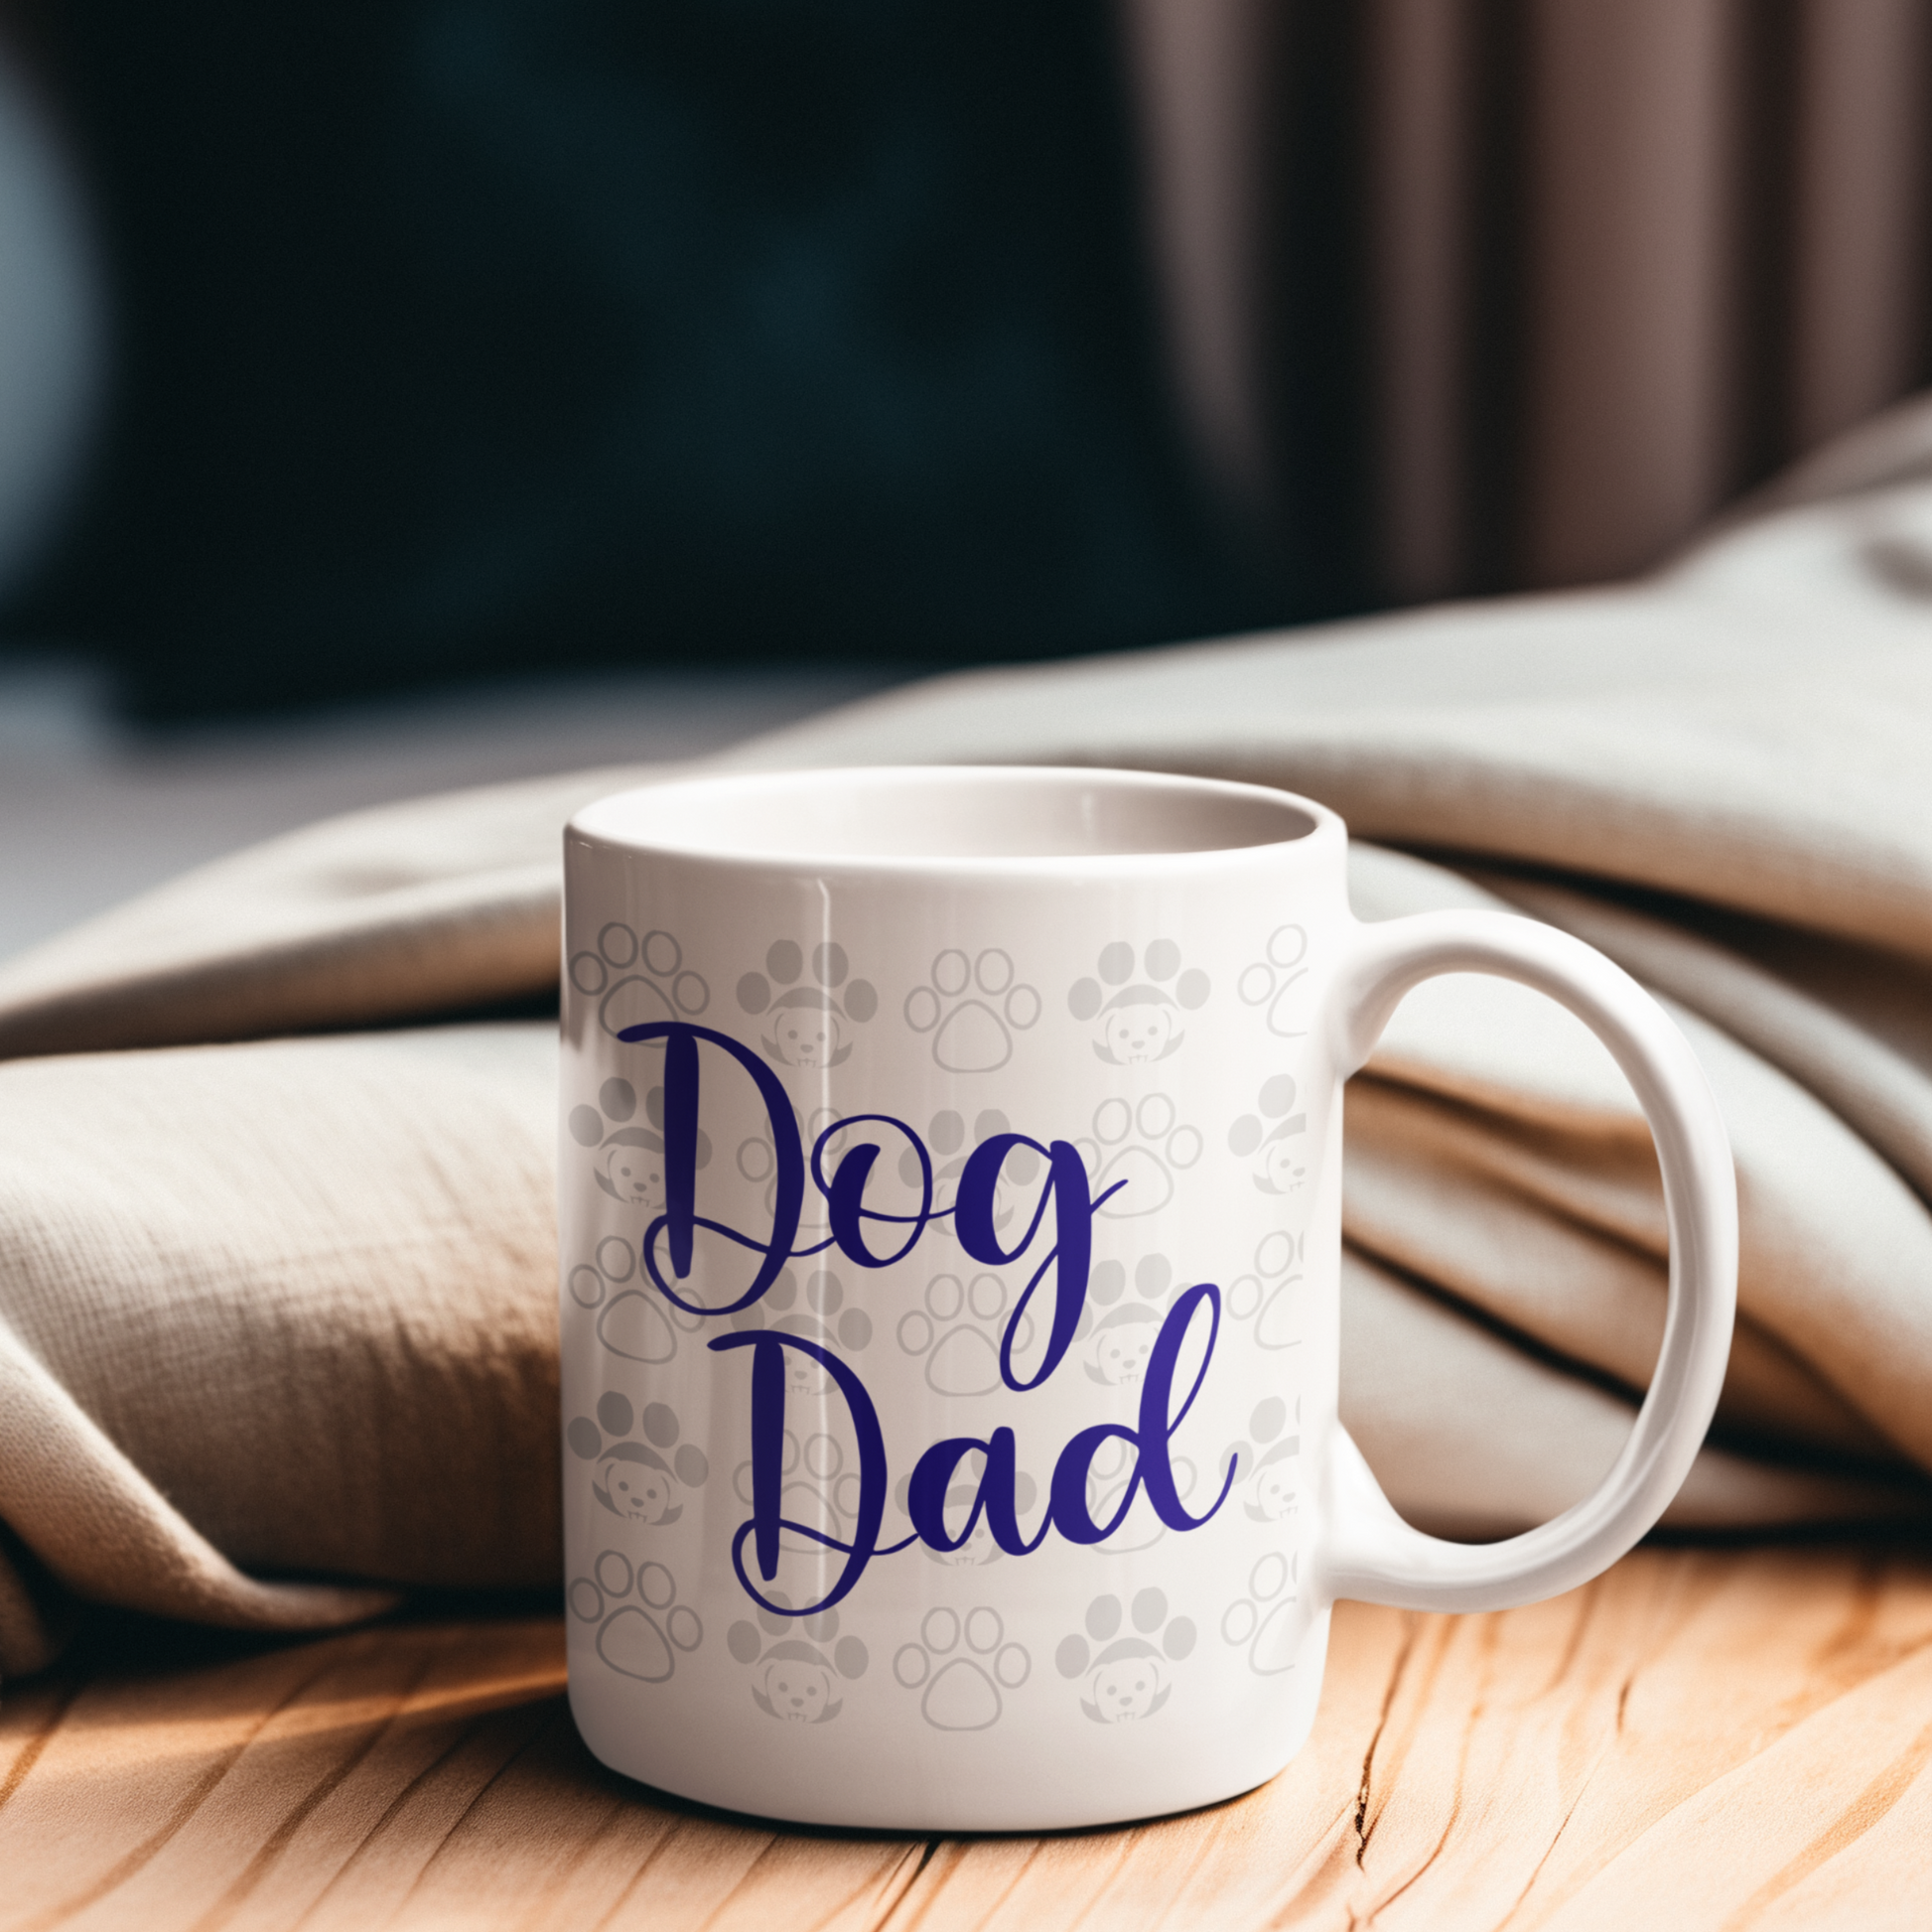 Dog Dad coffee Mug 11 oz, front view.